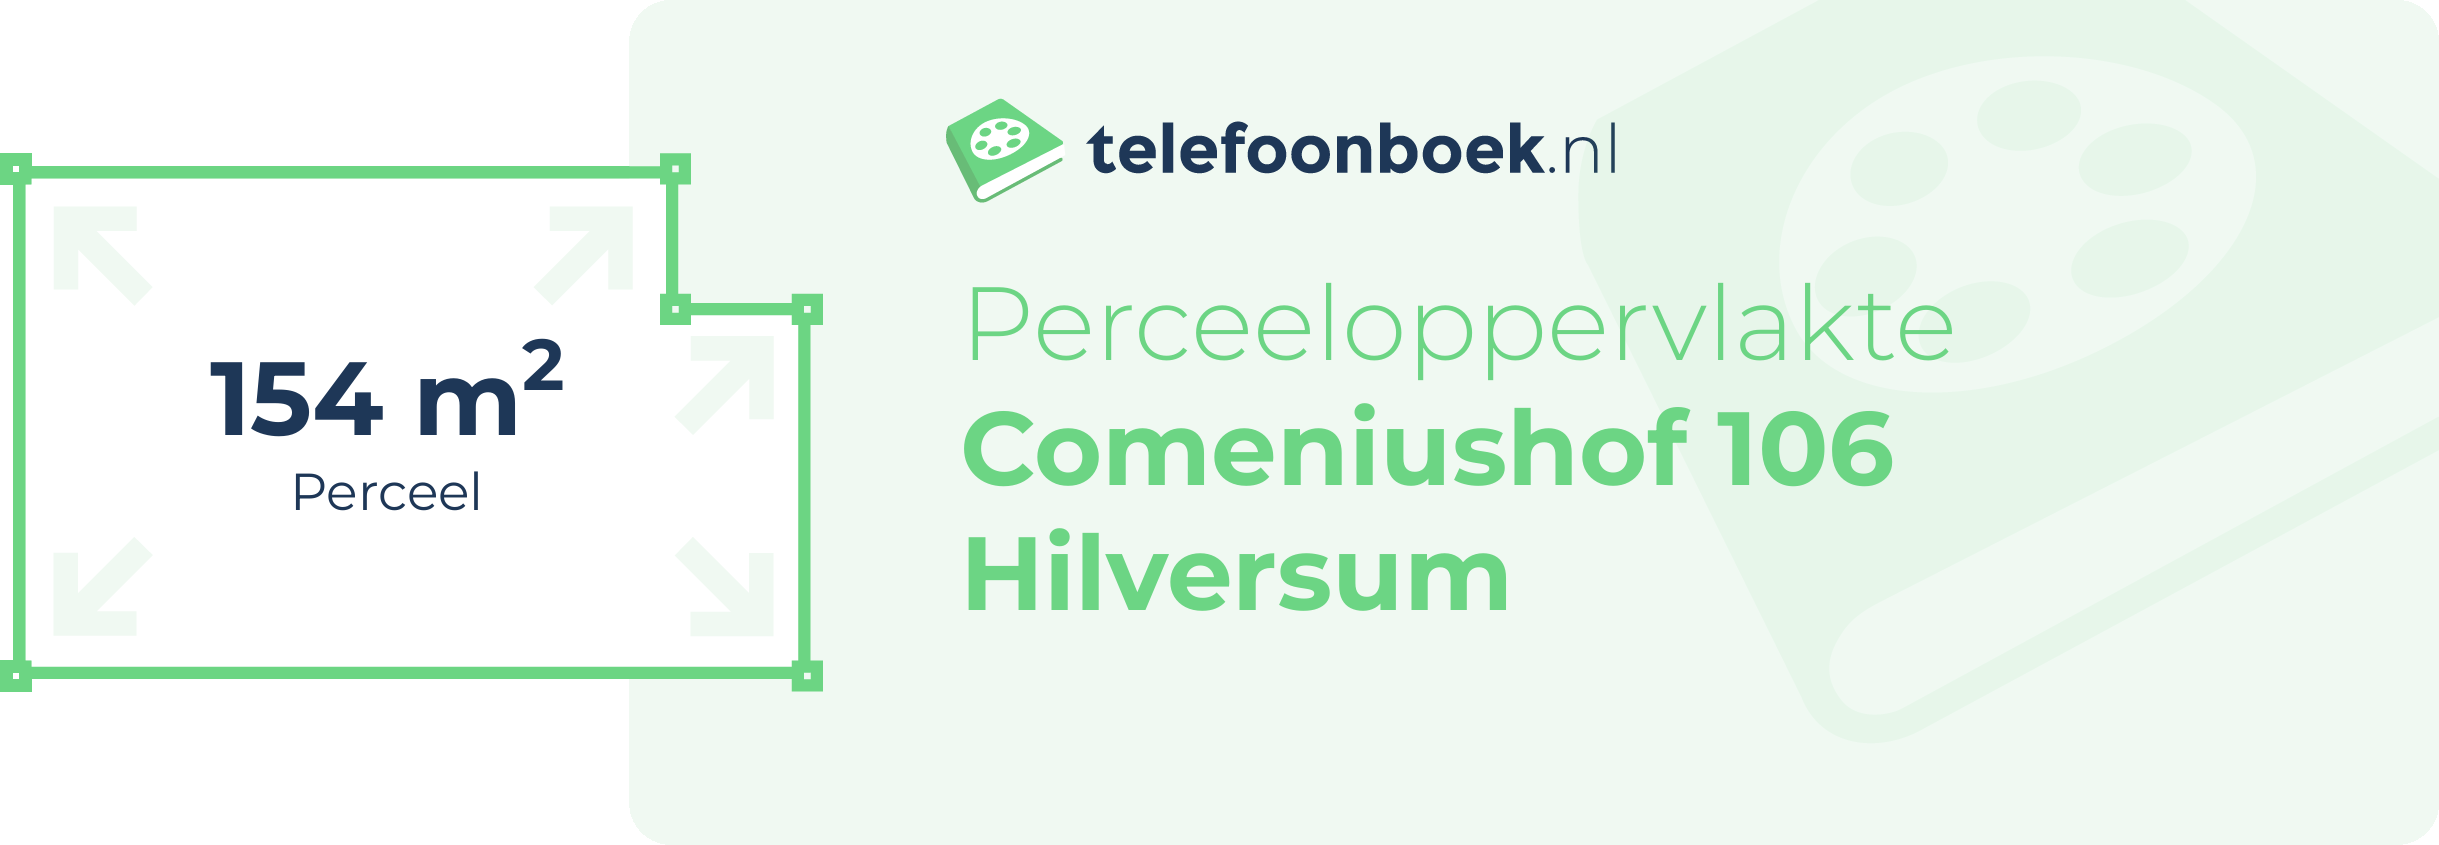 Perceeloppervlakte Comeniushof 106 Hilversum